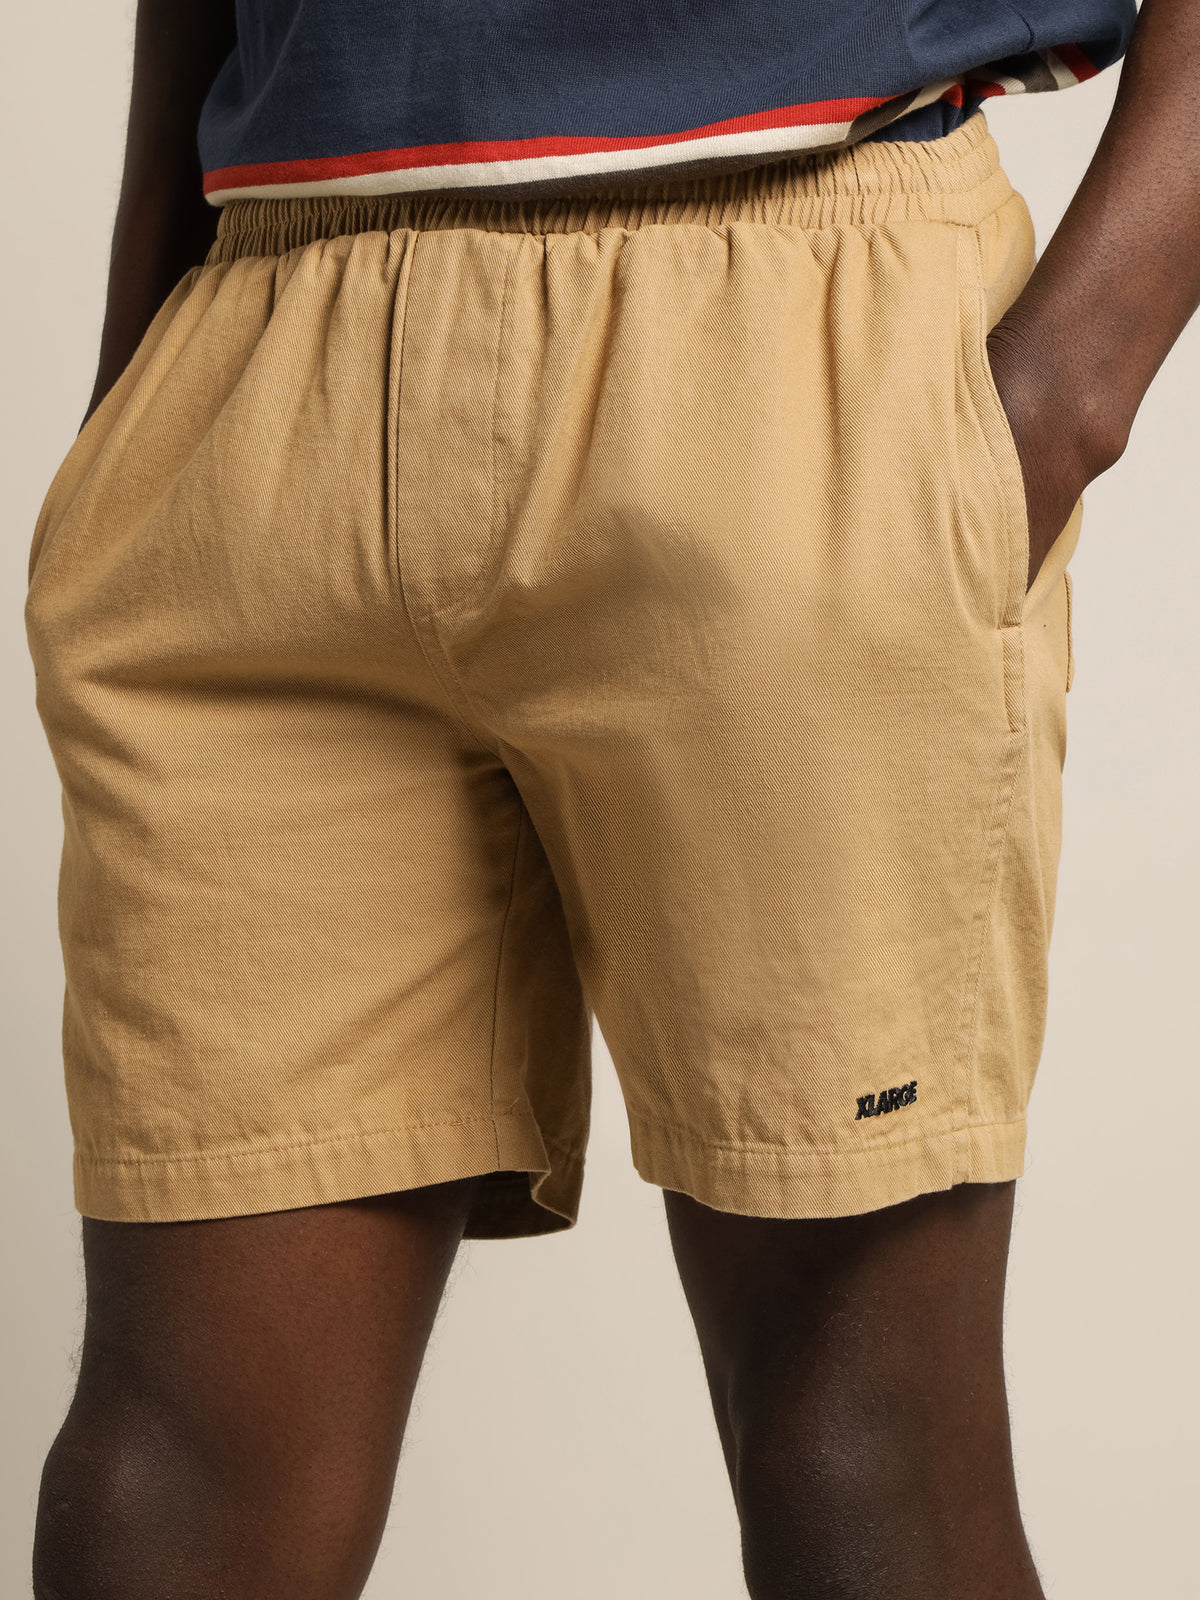 LA 91 Shorts in Khaki